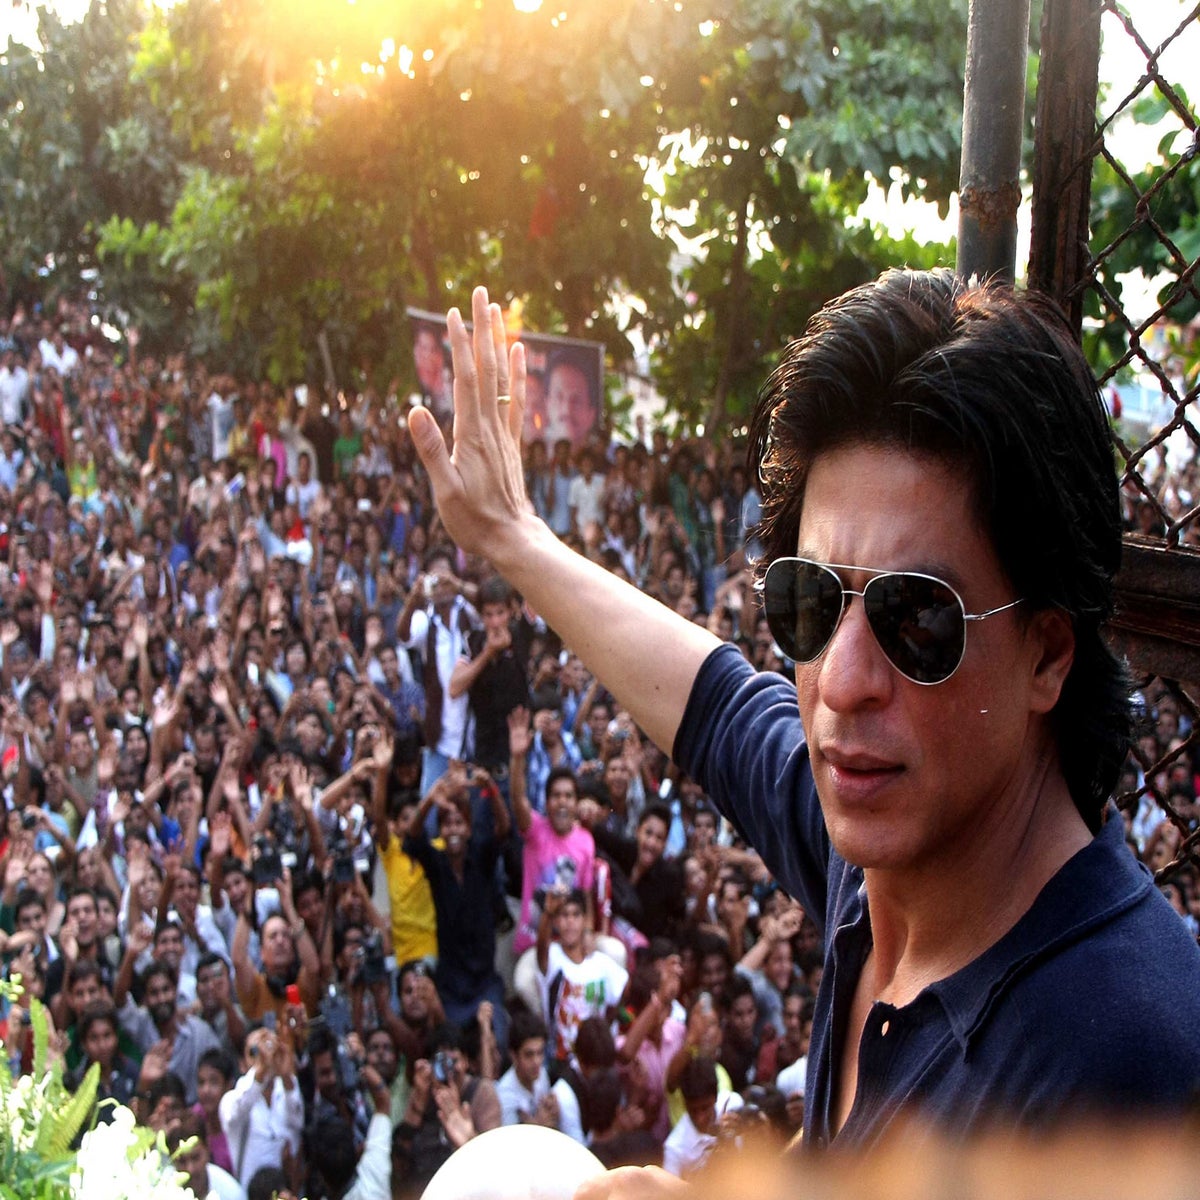 Shah Rukh Khan's Bollywood blockbuster meets India's culture wars